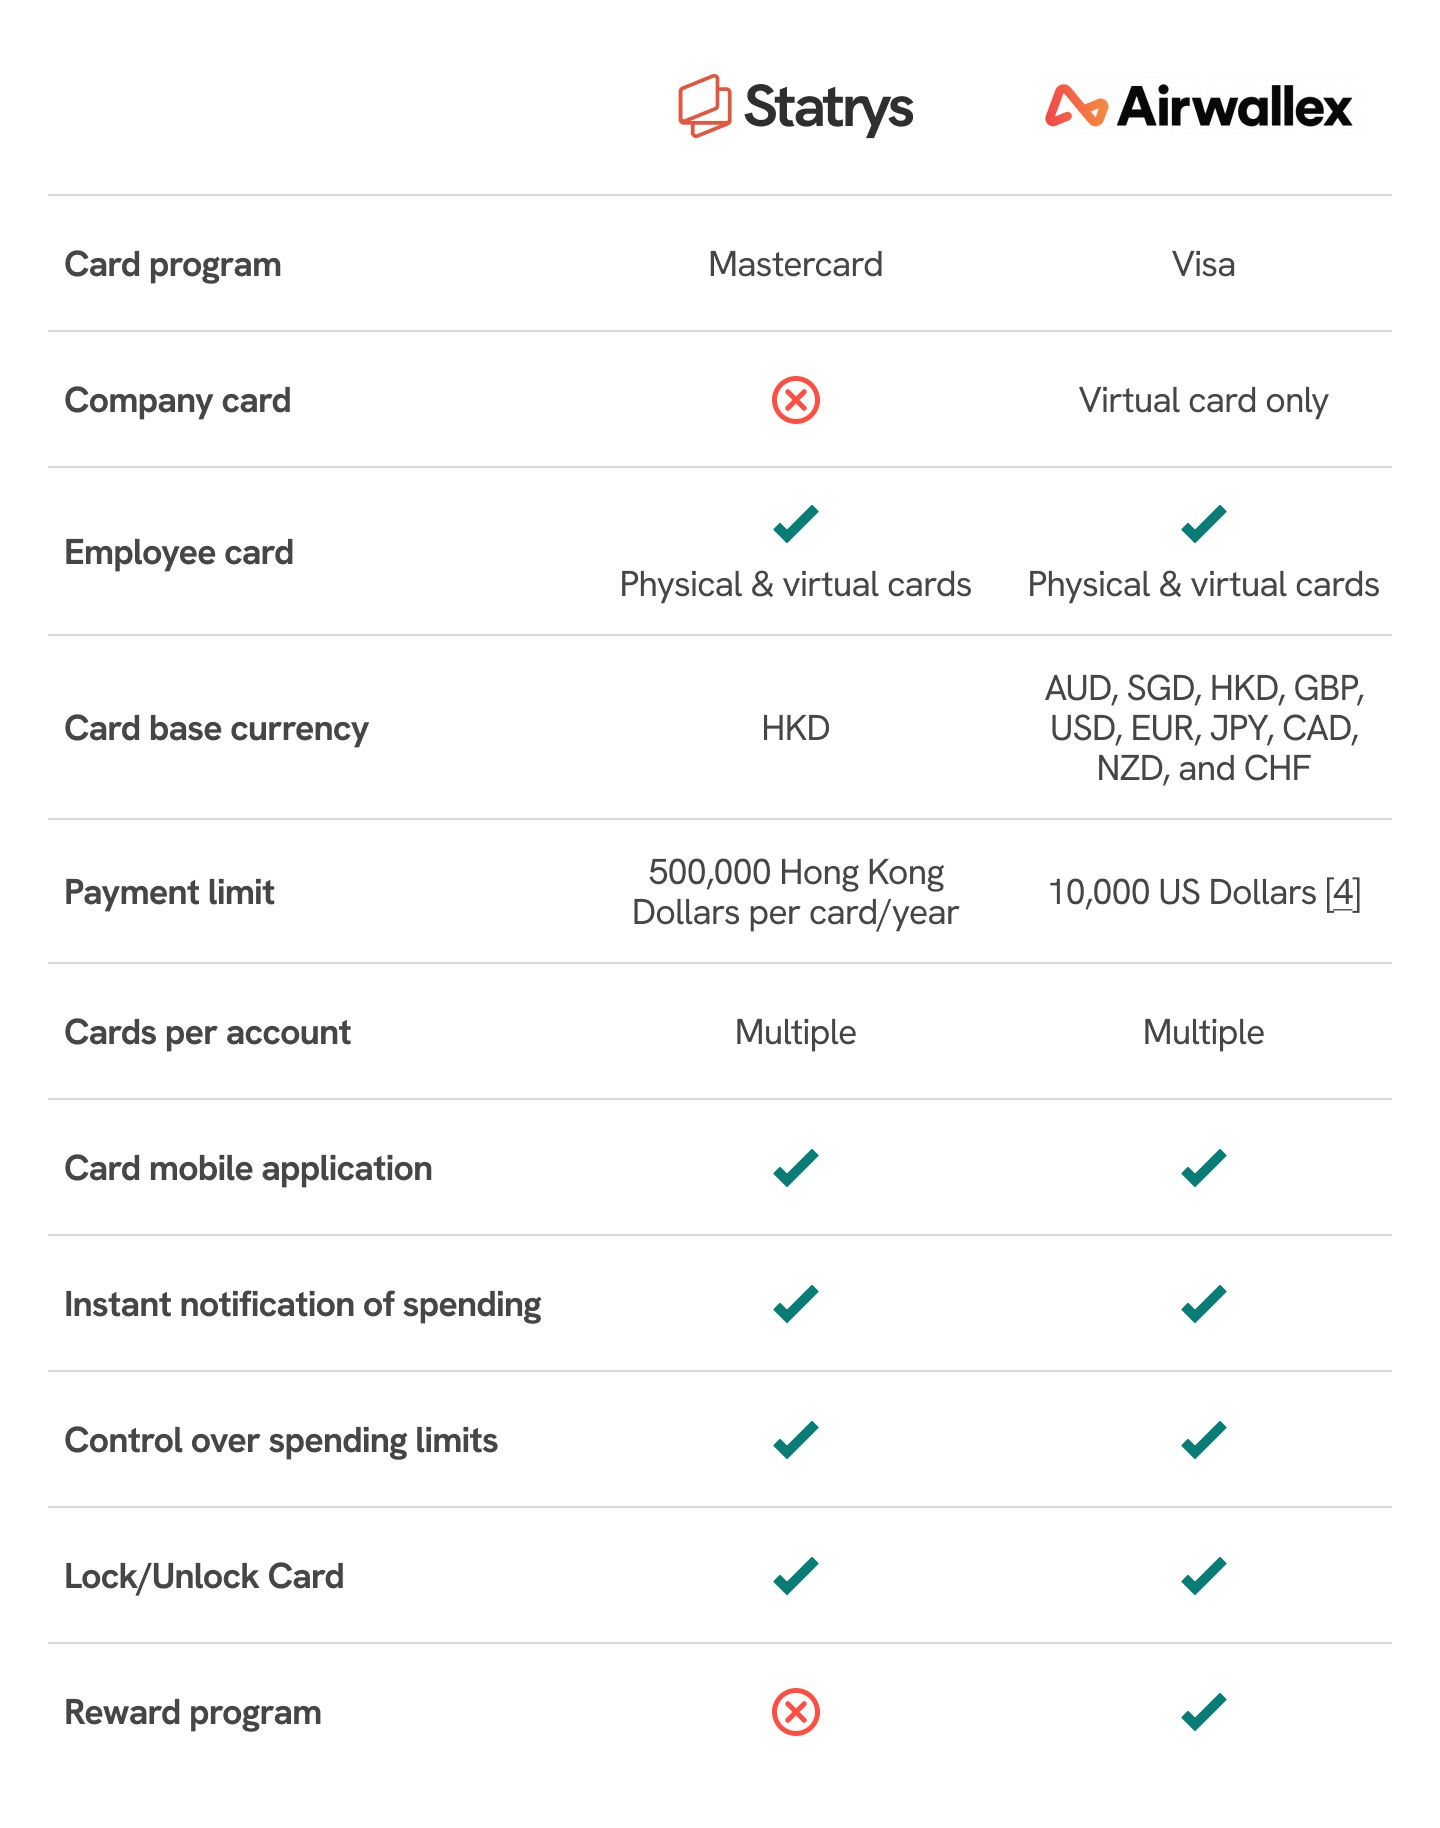 Statrys vs Airwallex card comparison